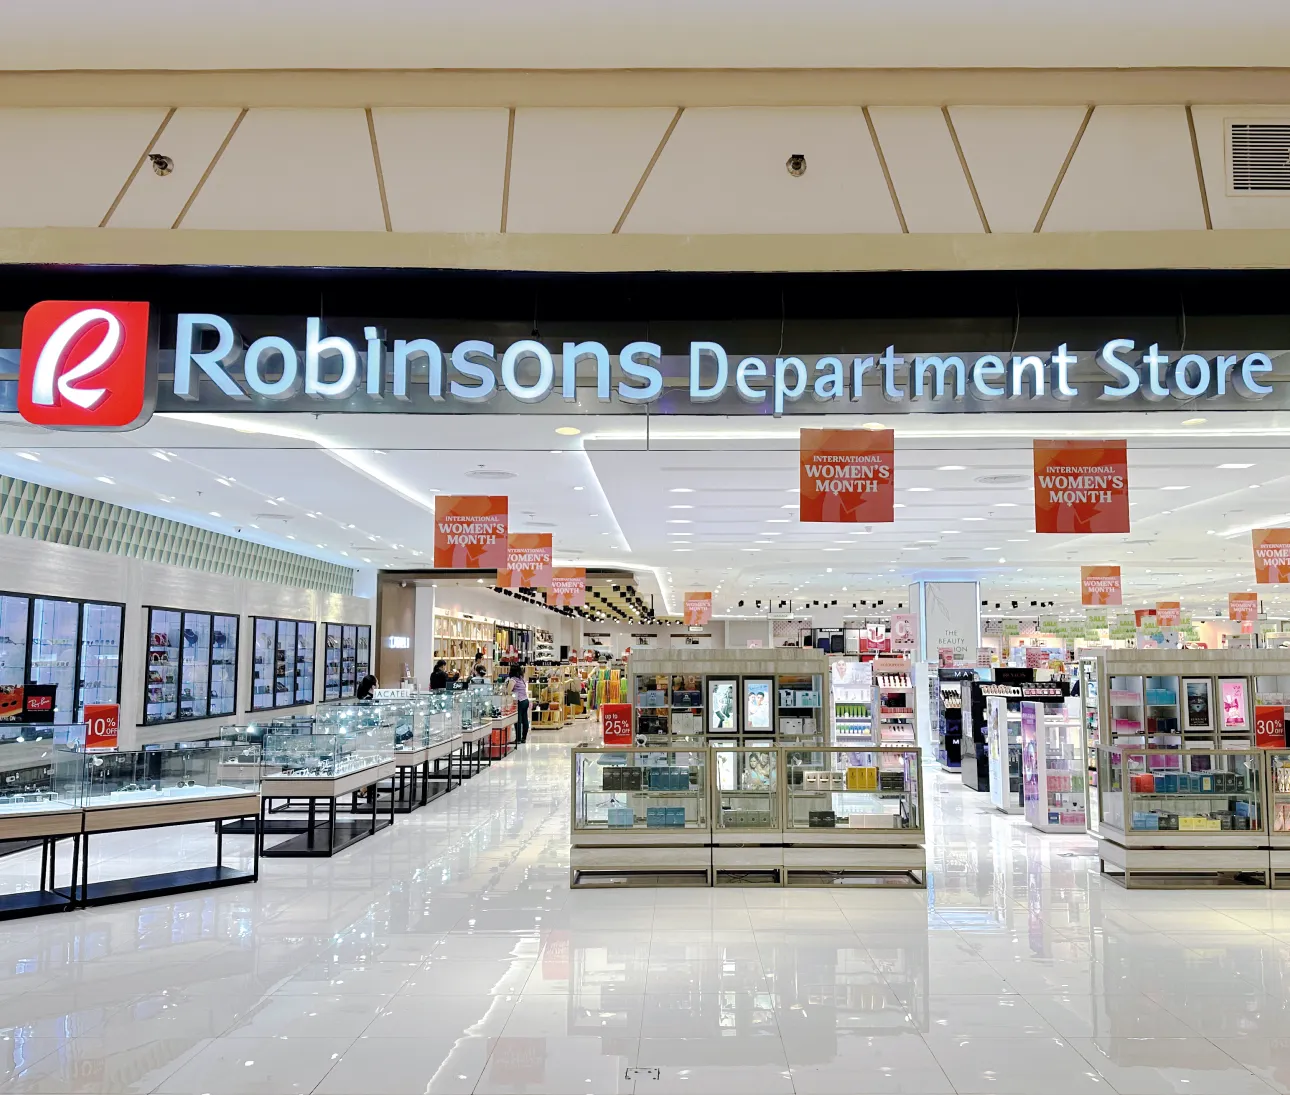 Robinsons Department Store at Robinsons Magnolia in Quezon City, Metro Manila